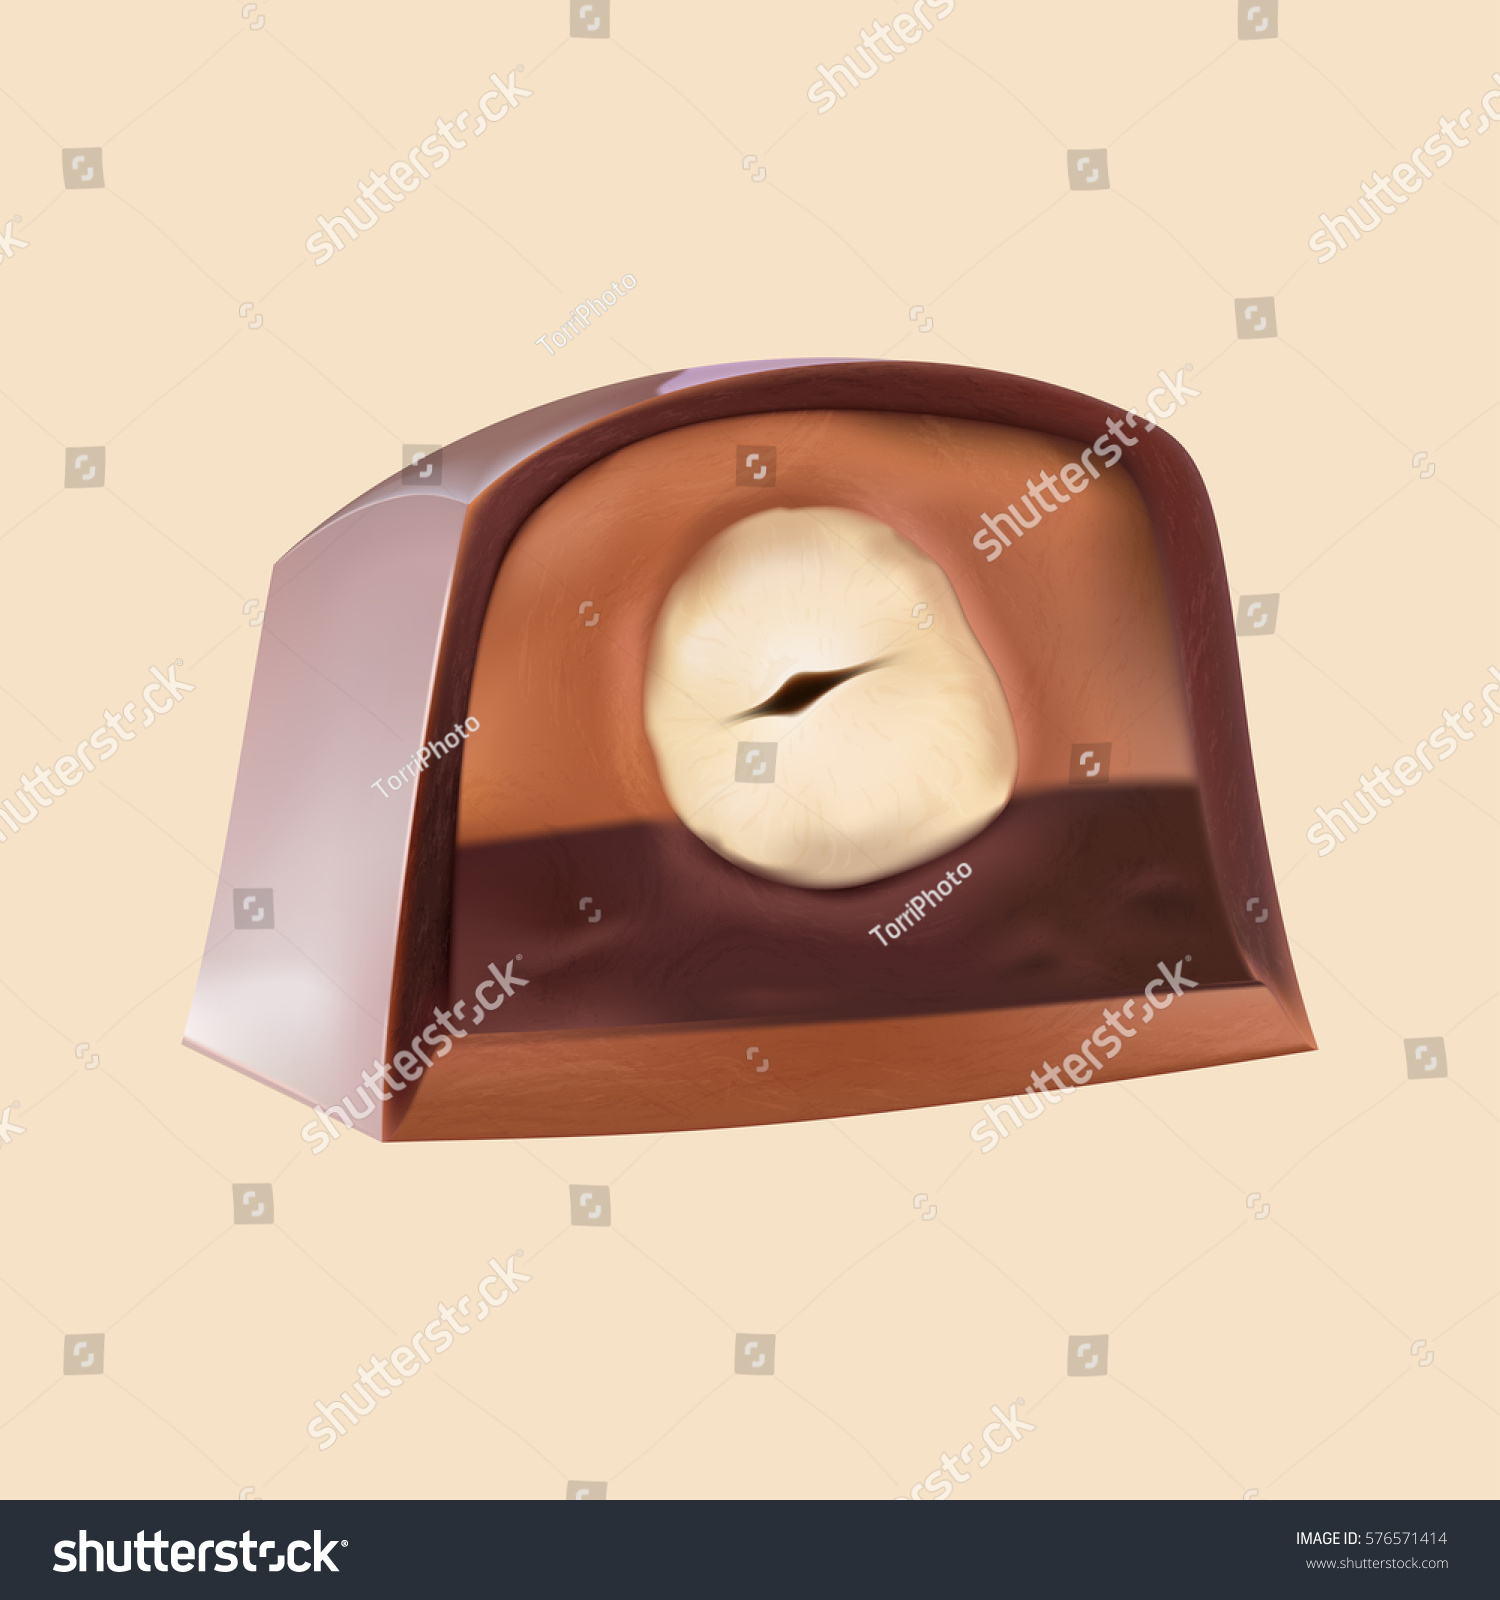 https://www.shutterstock.com/image-vector/cut-chocolate-candy-hazelnut-vector-photorealistic-576571414